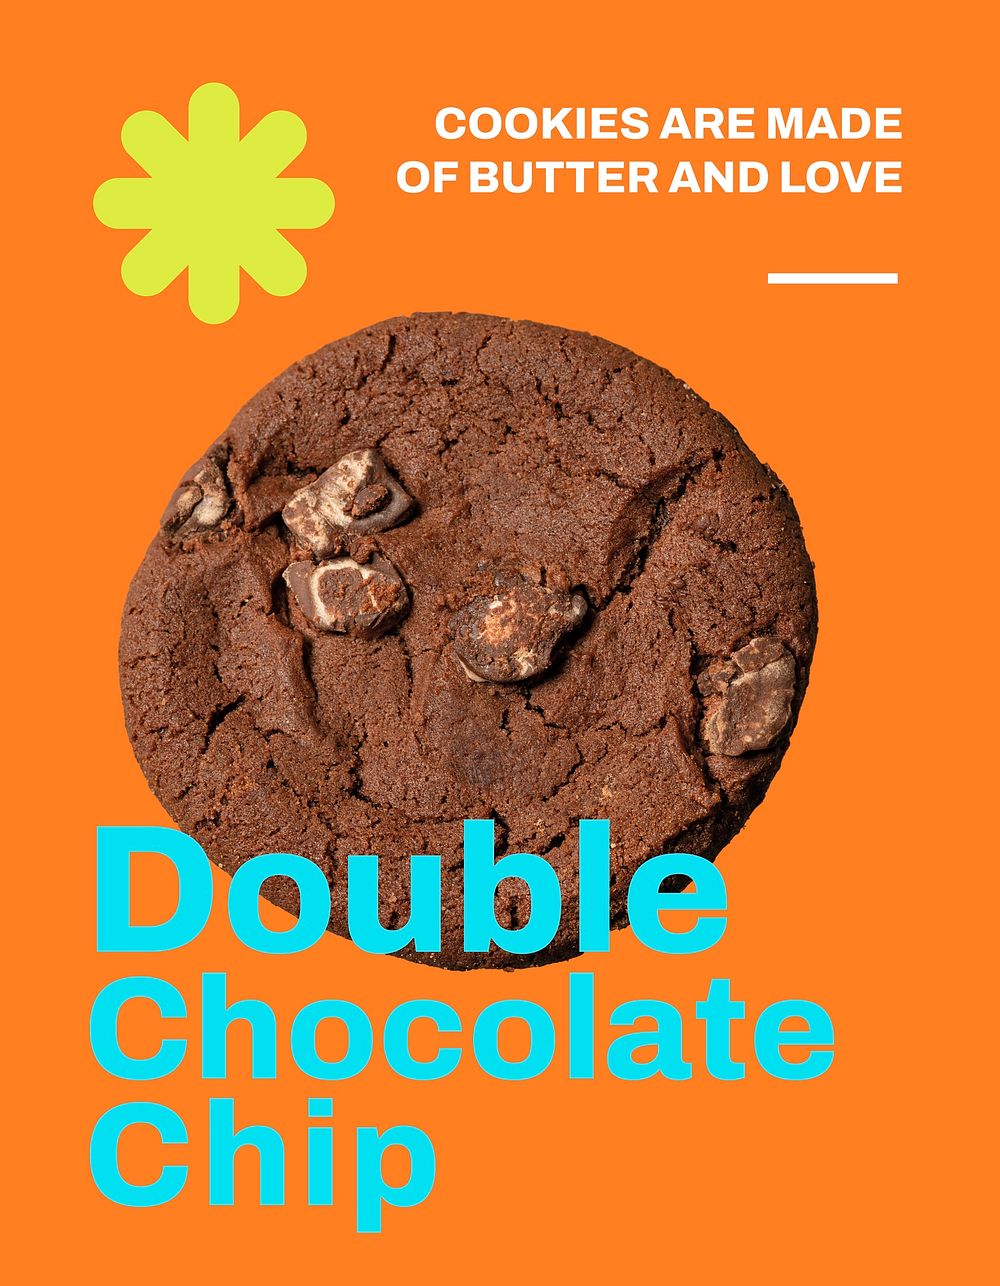 Chocolate cookie flyer editable template, dessert quote vector